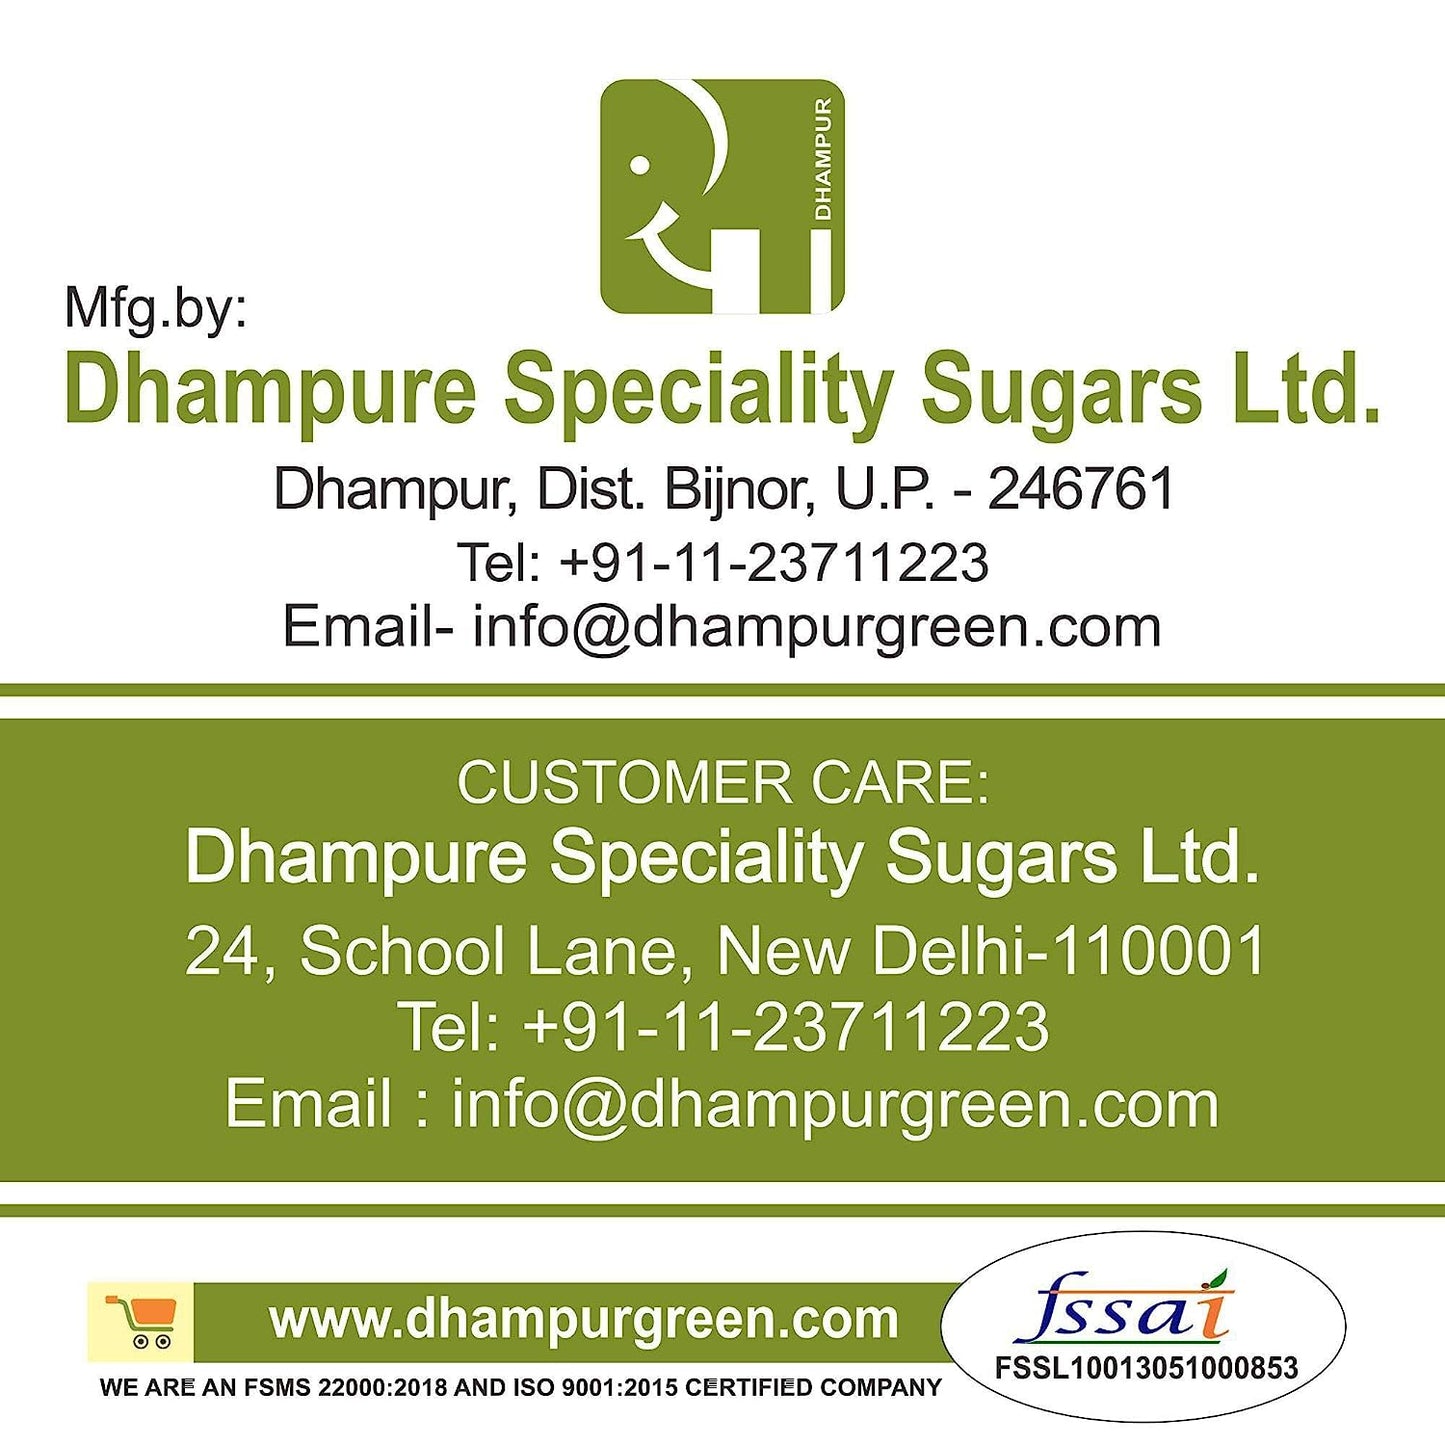 
                  
                    Dhampur Green Sweets Mithai Gift Box - Gur Besan Laddu 500g & Panjeeri Laddu Ladoo Laddoo 400g
                  
                